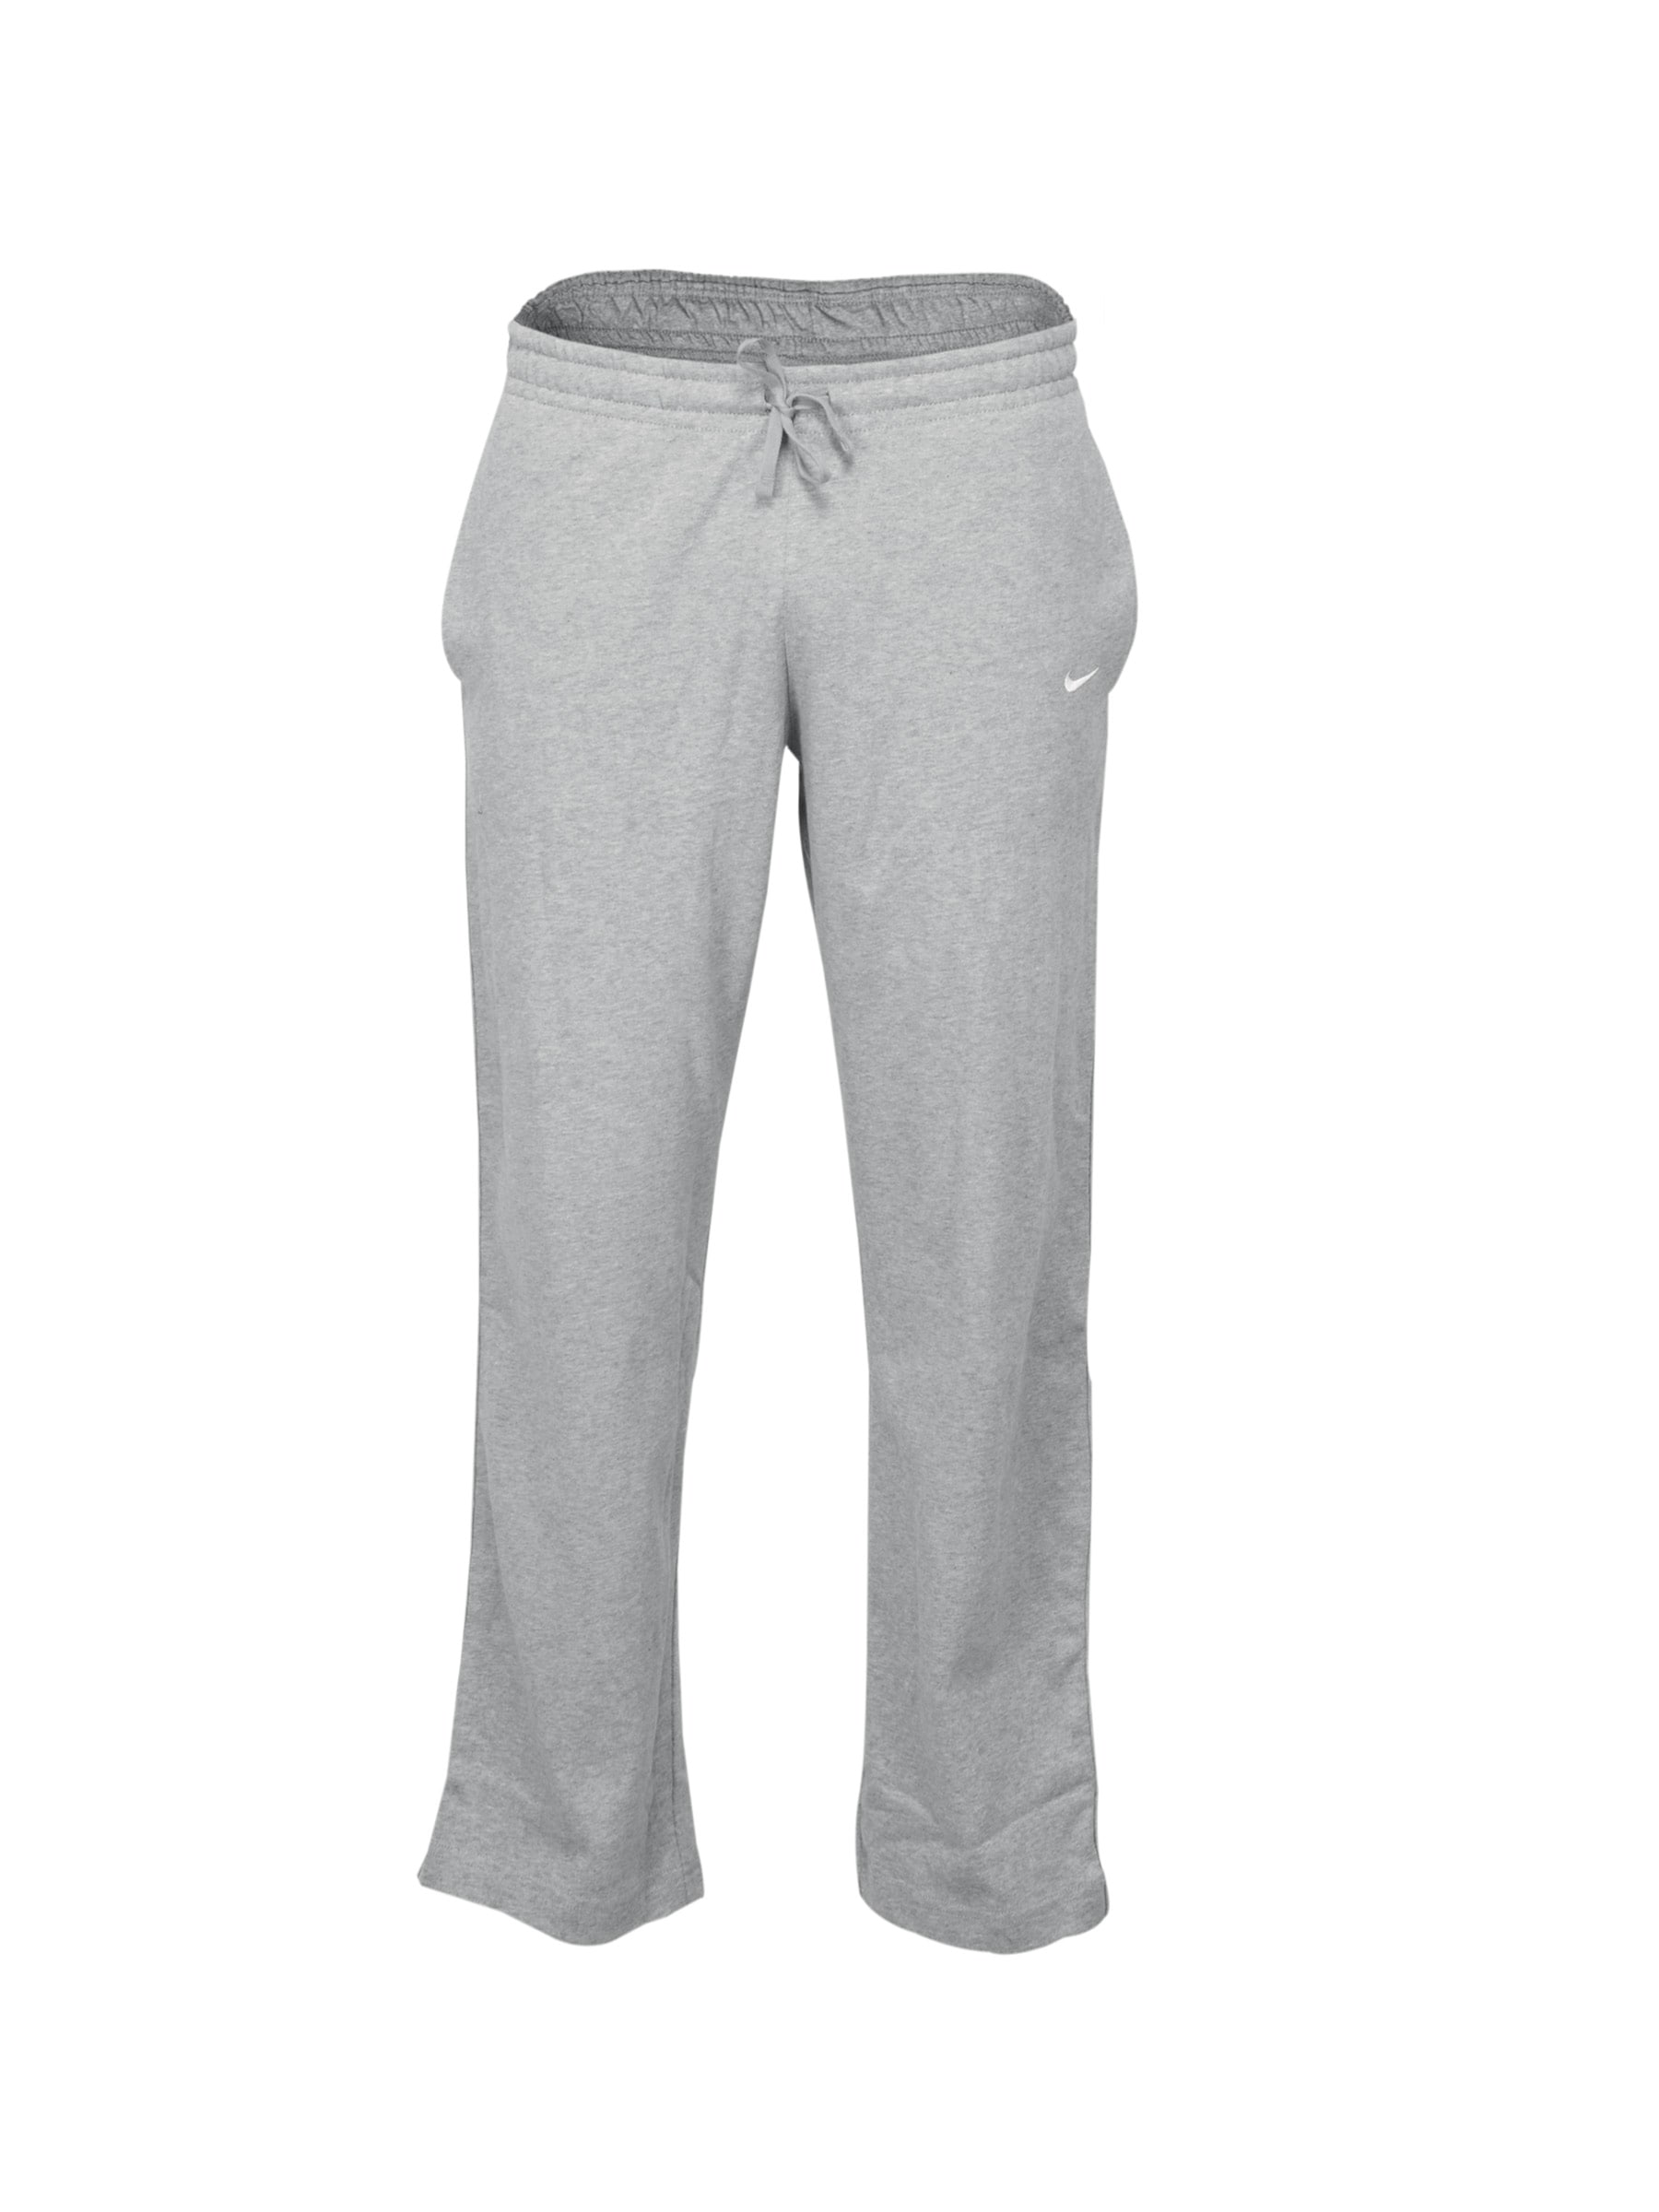 Nike Men Classic Jersey Grey Track Pants